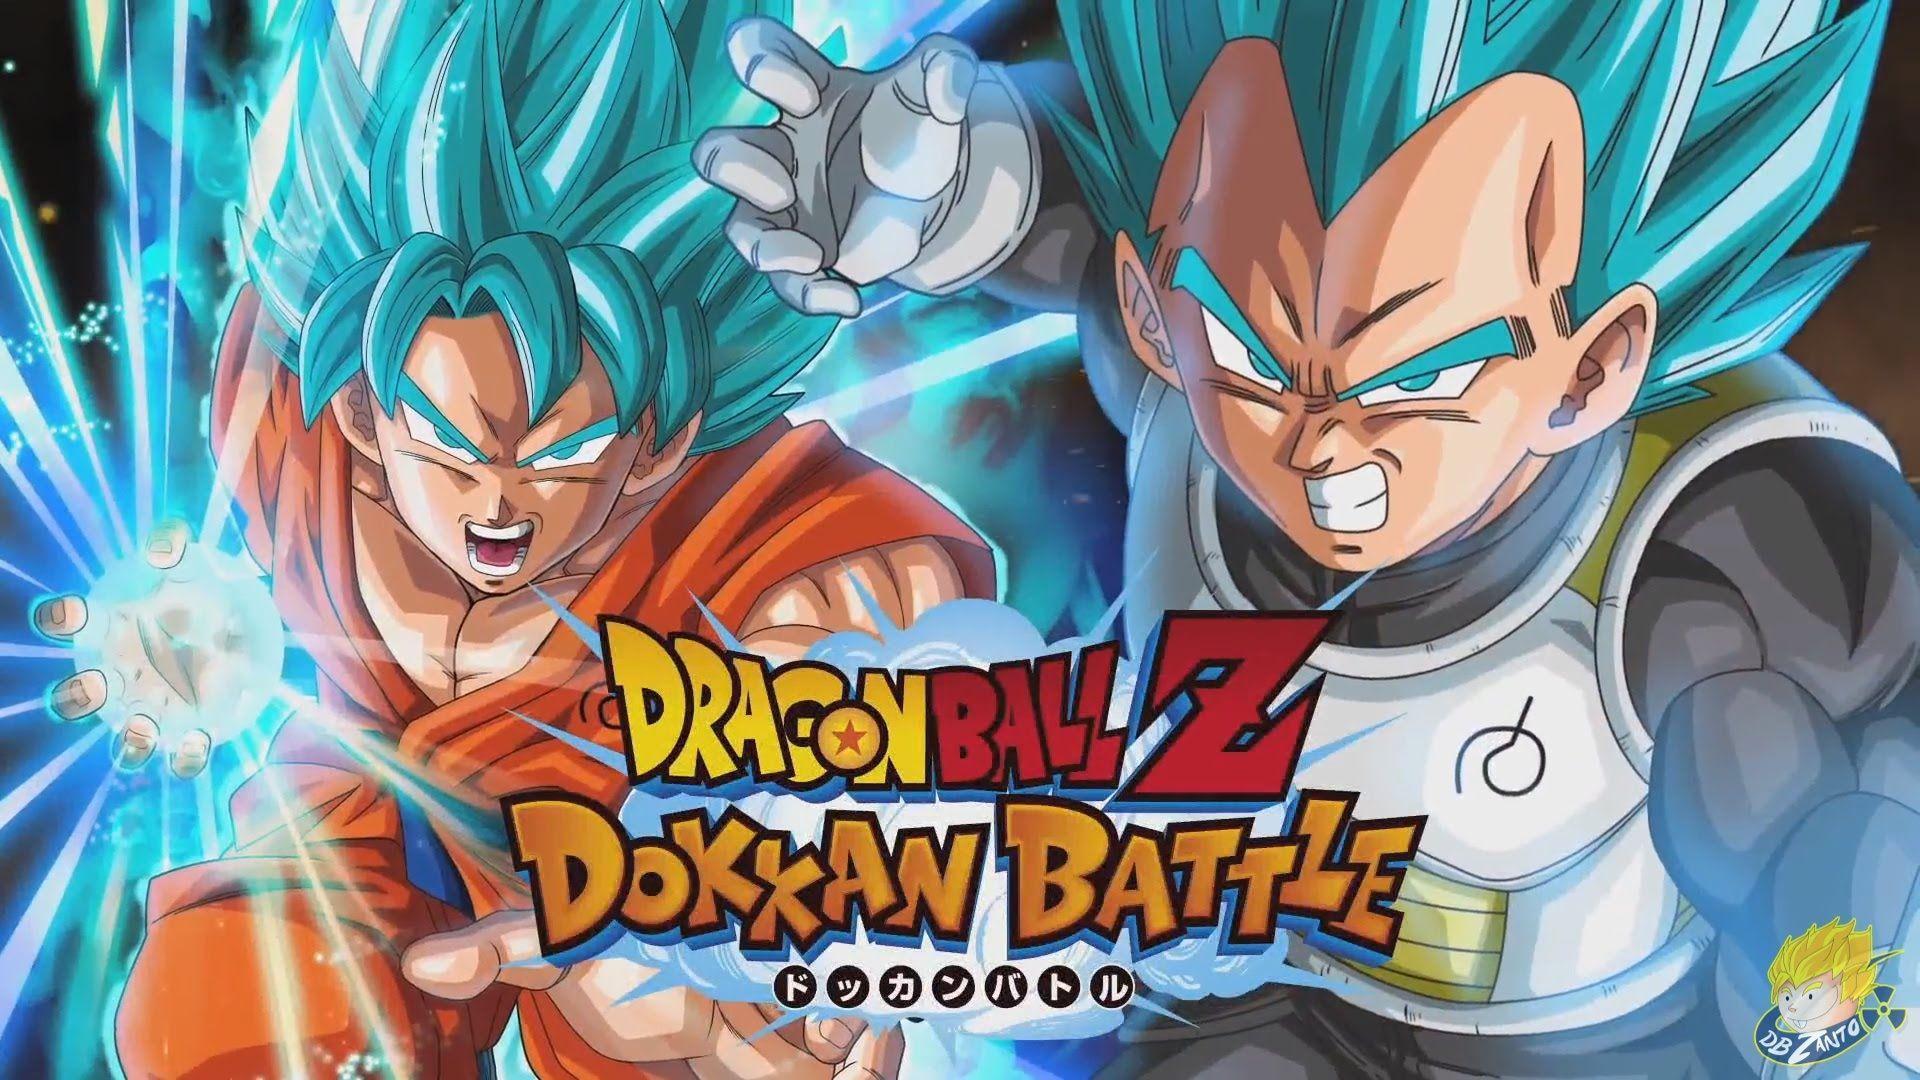 Dragon Ball Z Dokkan Battle Goku And Vegeta Wallpaper